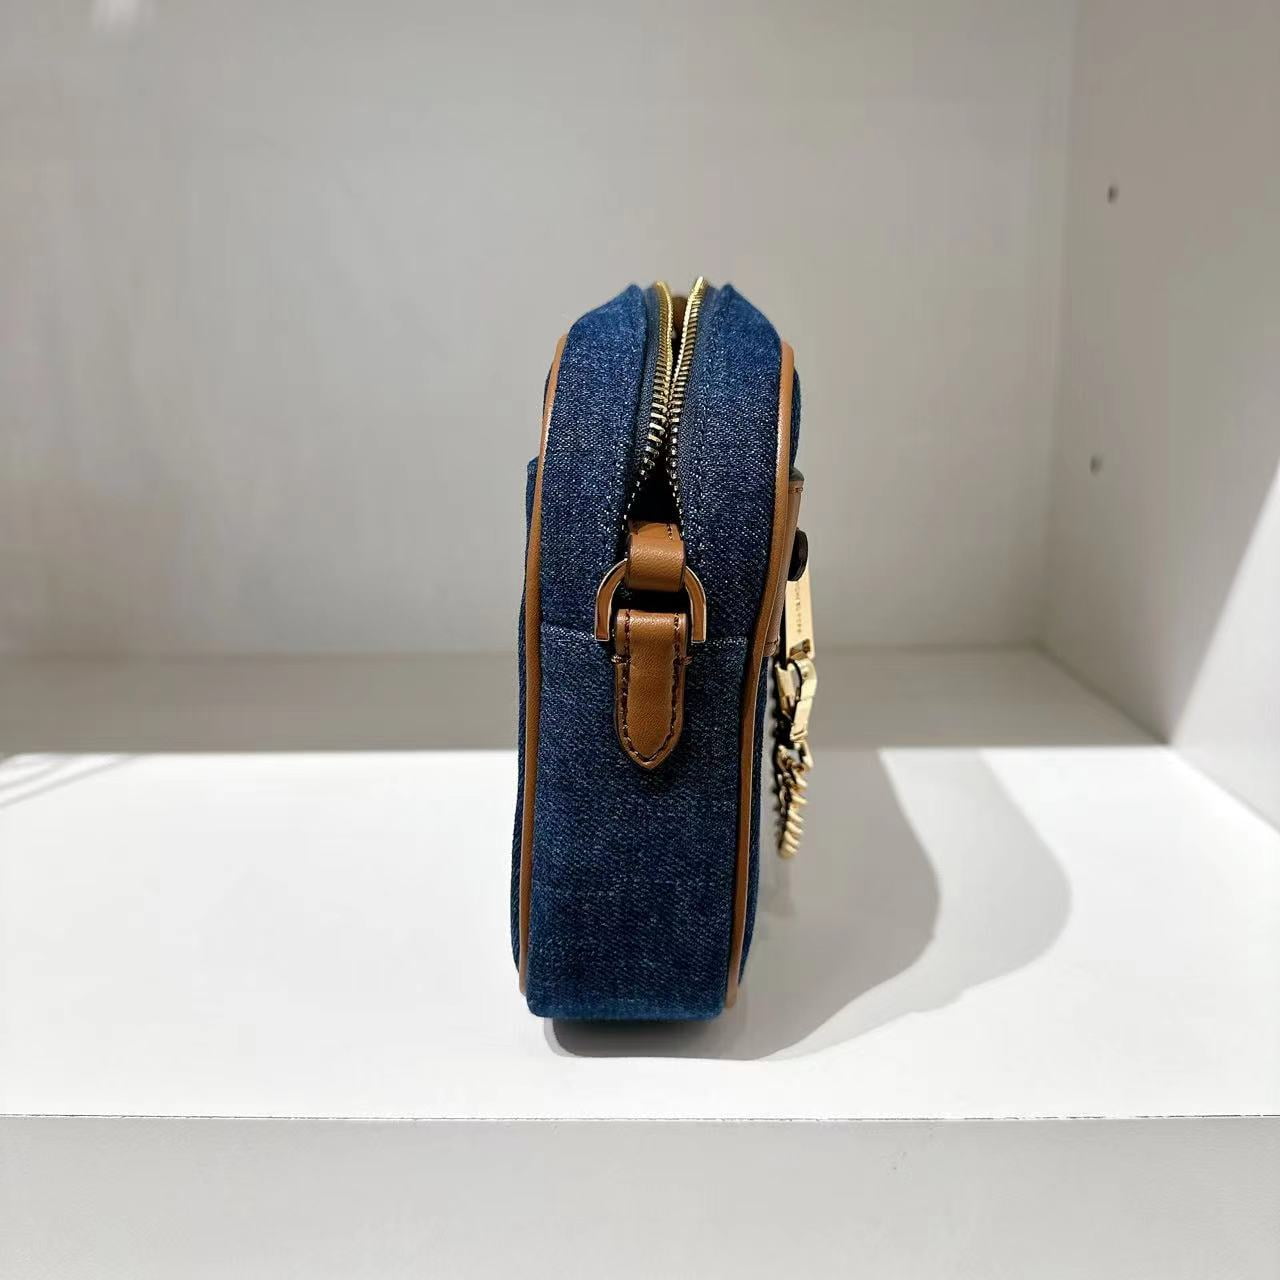 Michael Kors Karlie Small Leather Crossbody Bag in Pale Blue 32F1GCDC5L-487  194900938423 - Handbags - Jomashop